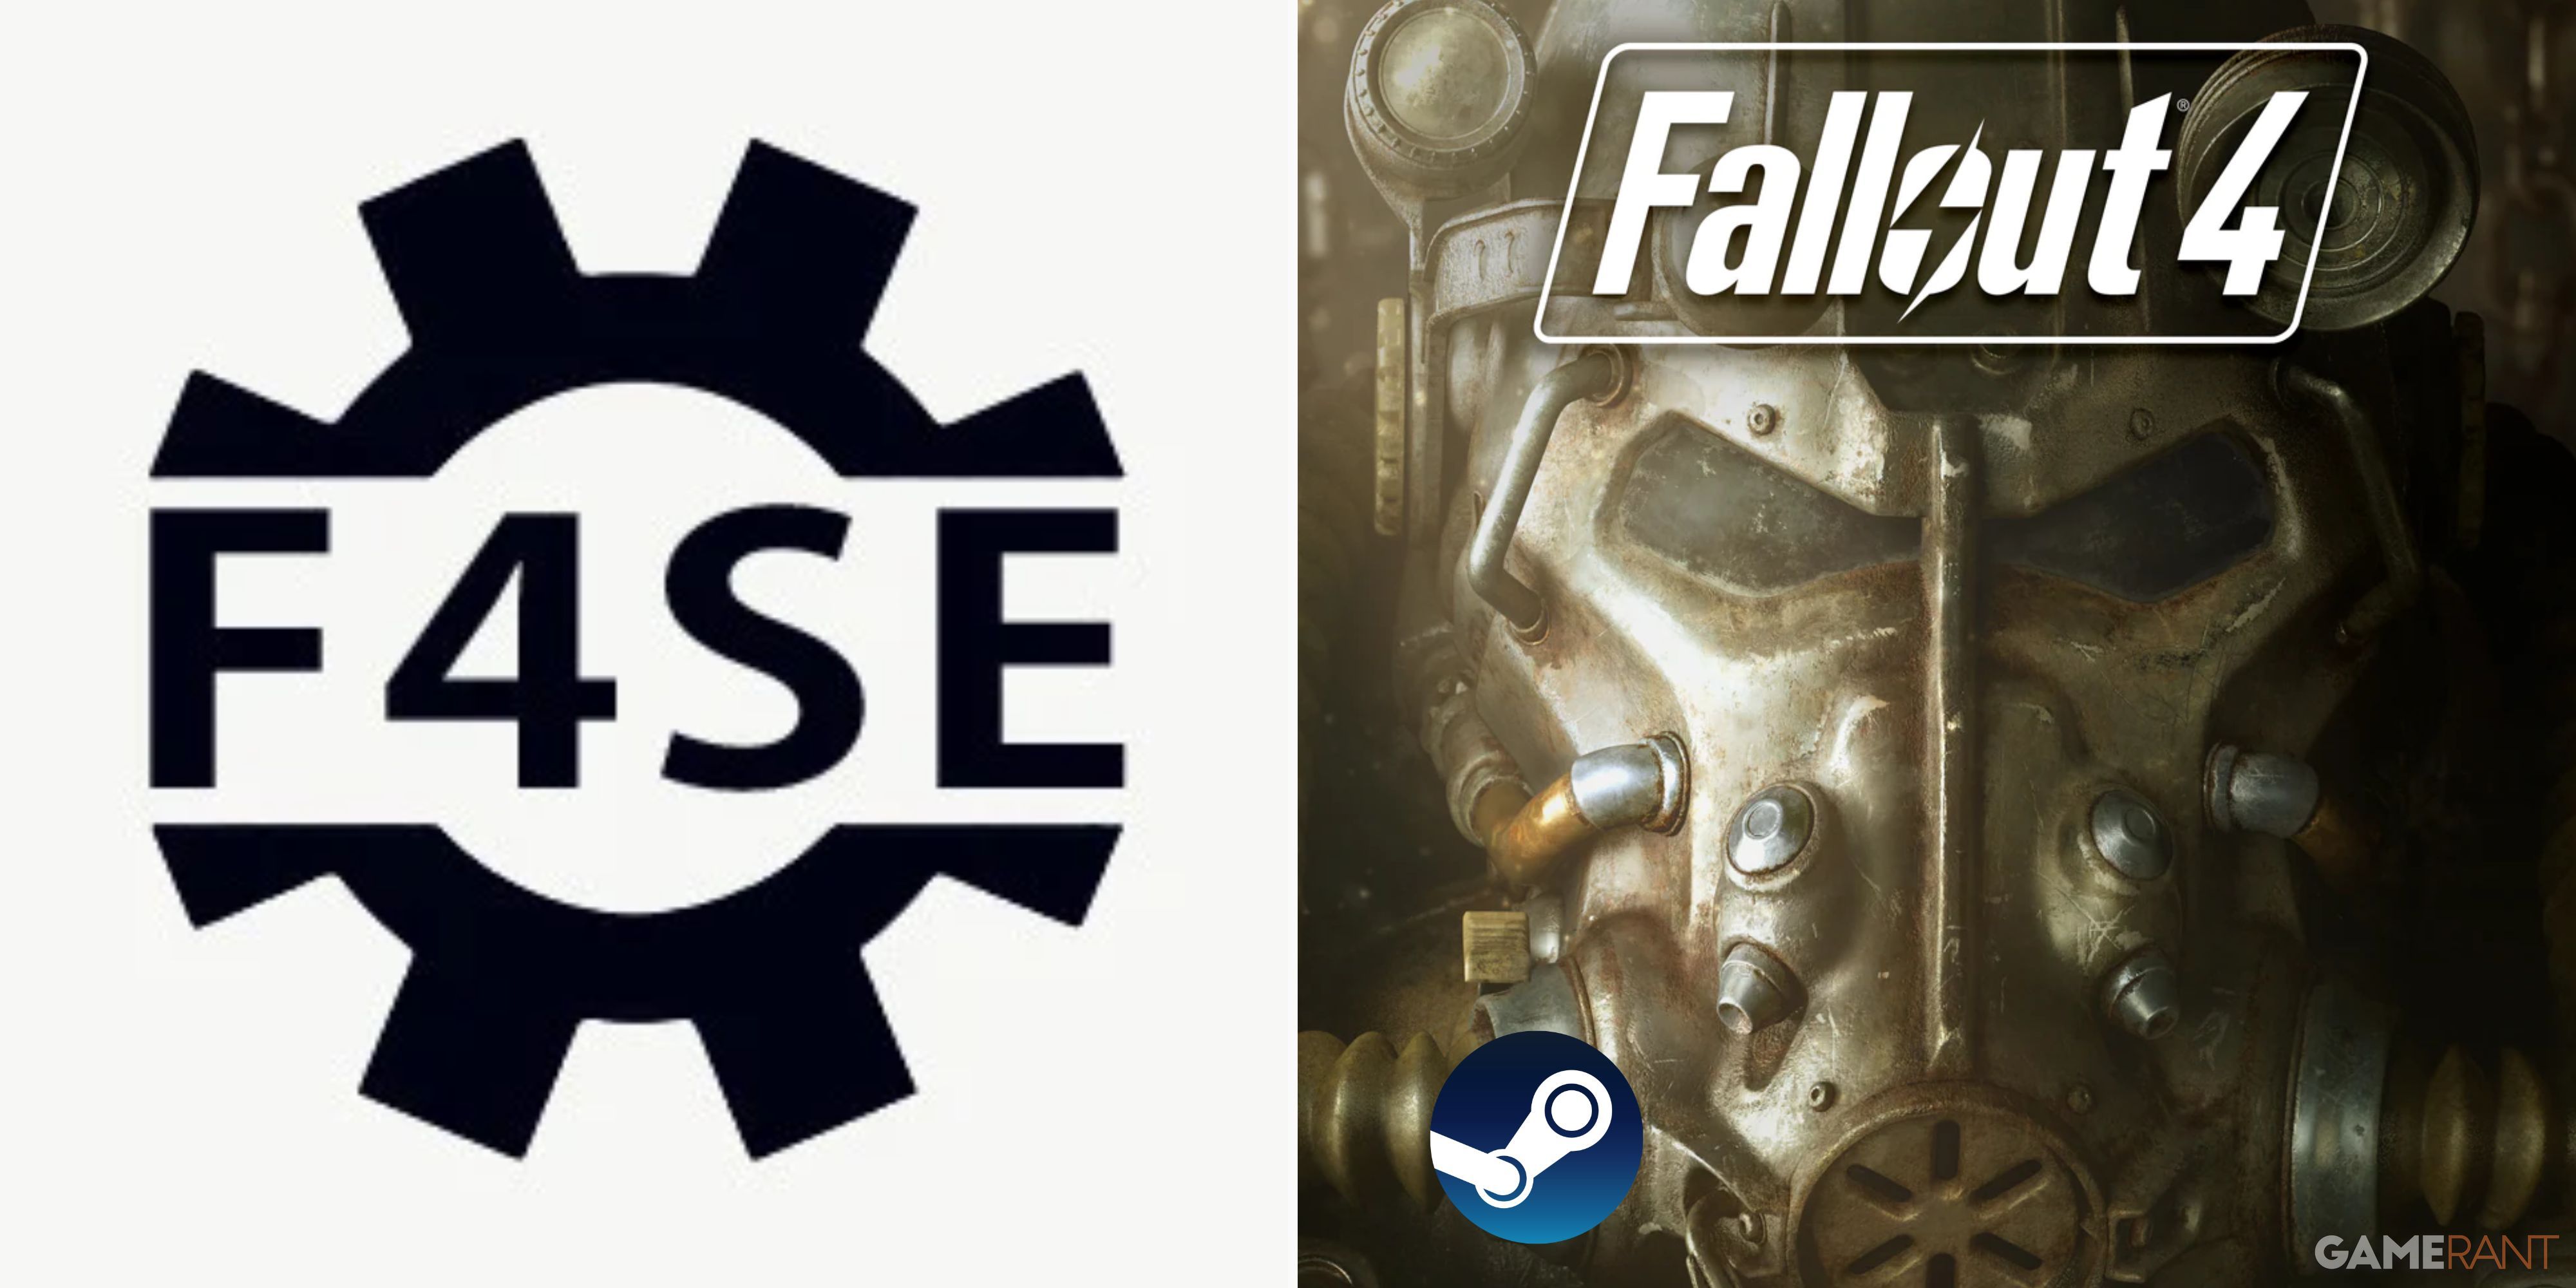 Fallout 4 and F4SE